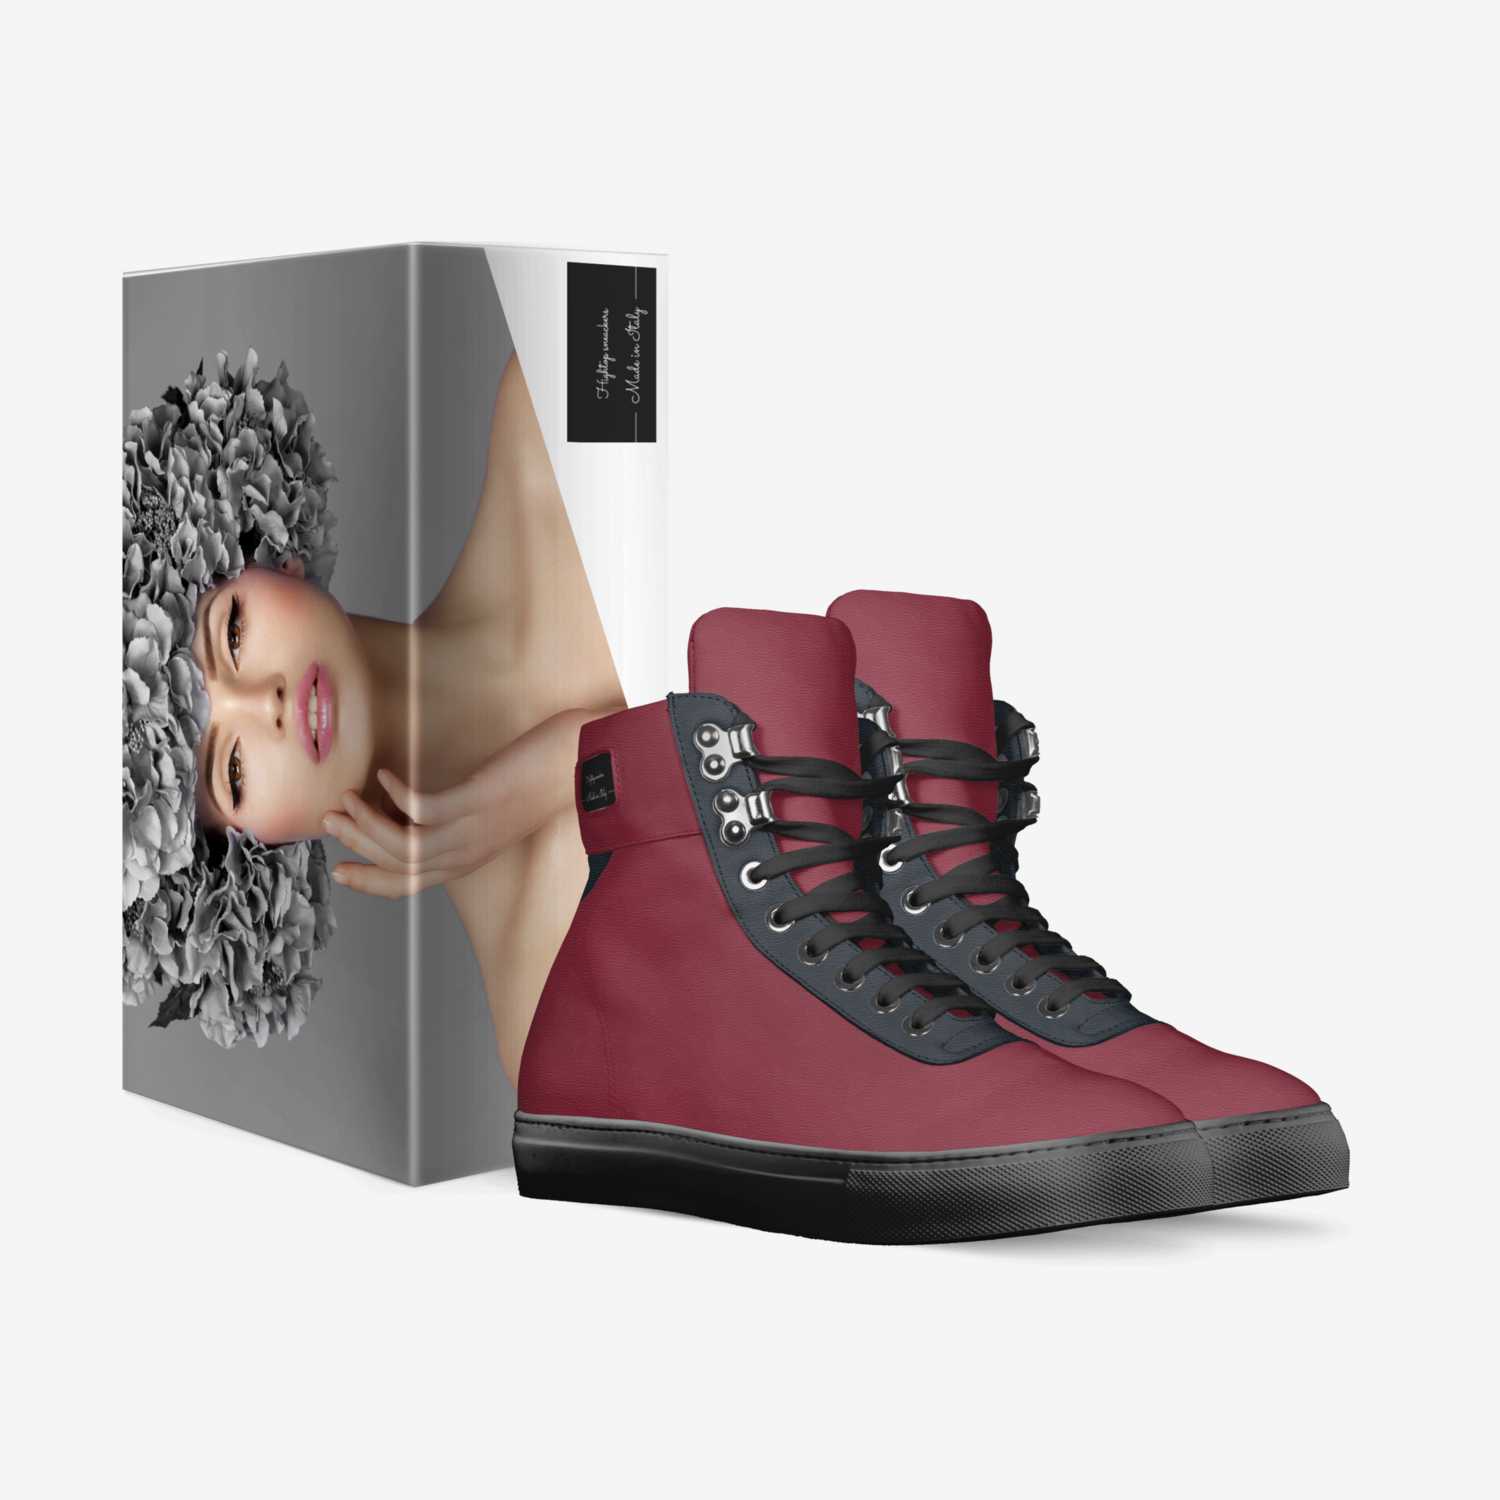 Neriah custom made in Italy shoes by Neriah Dillard | Box view